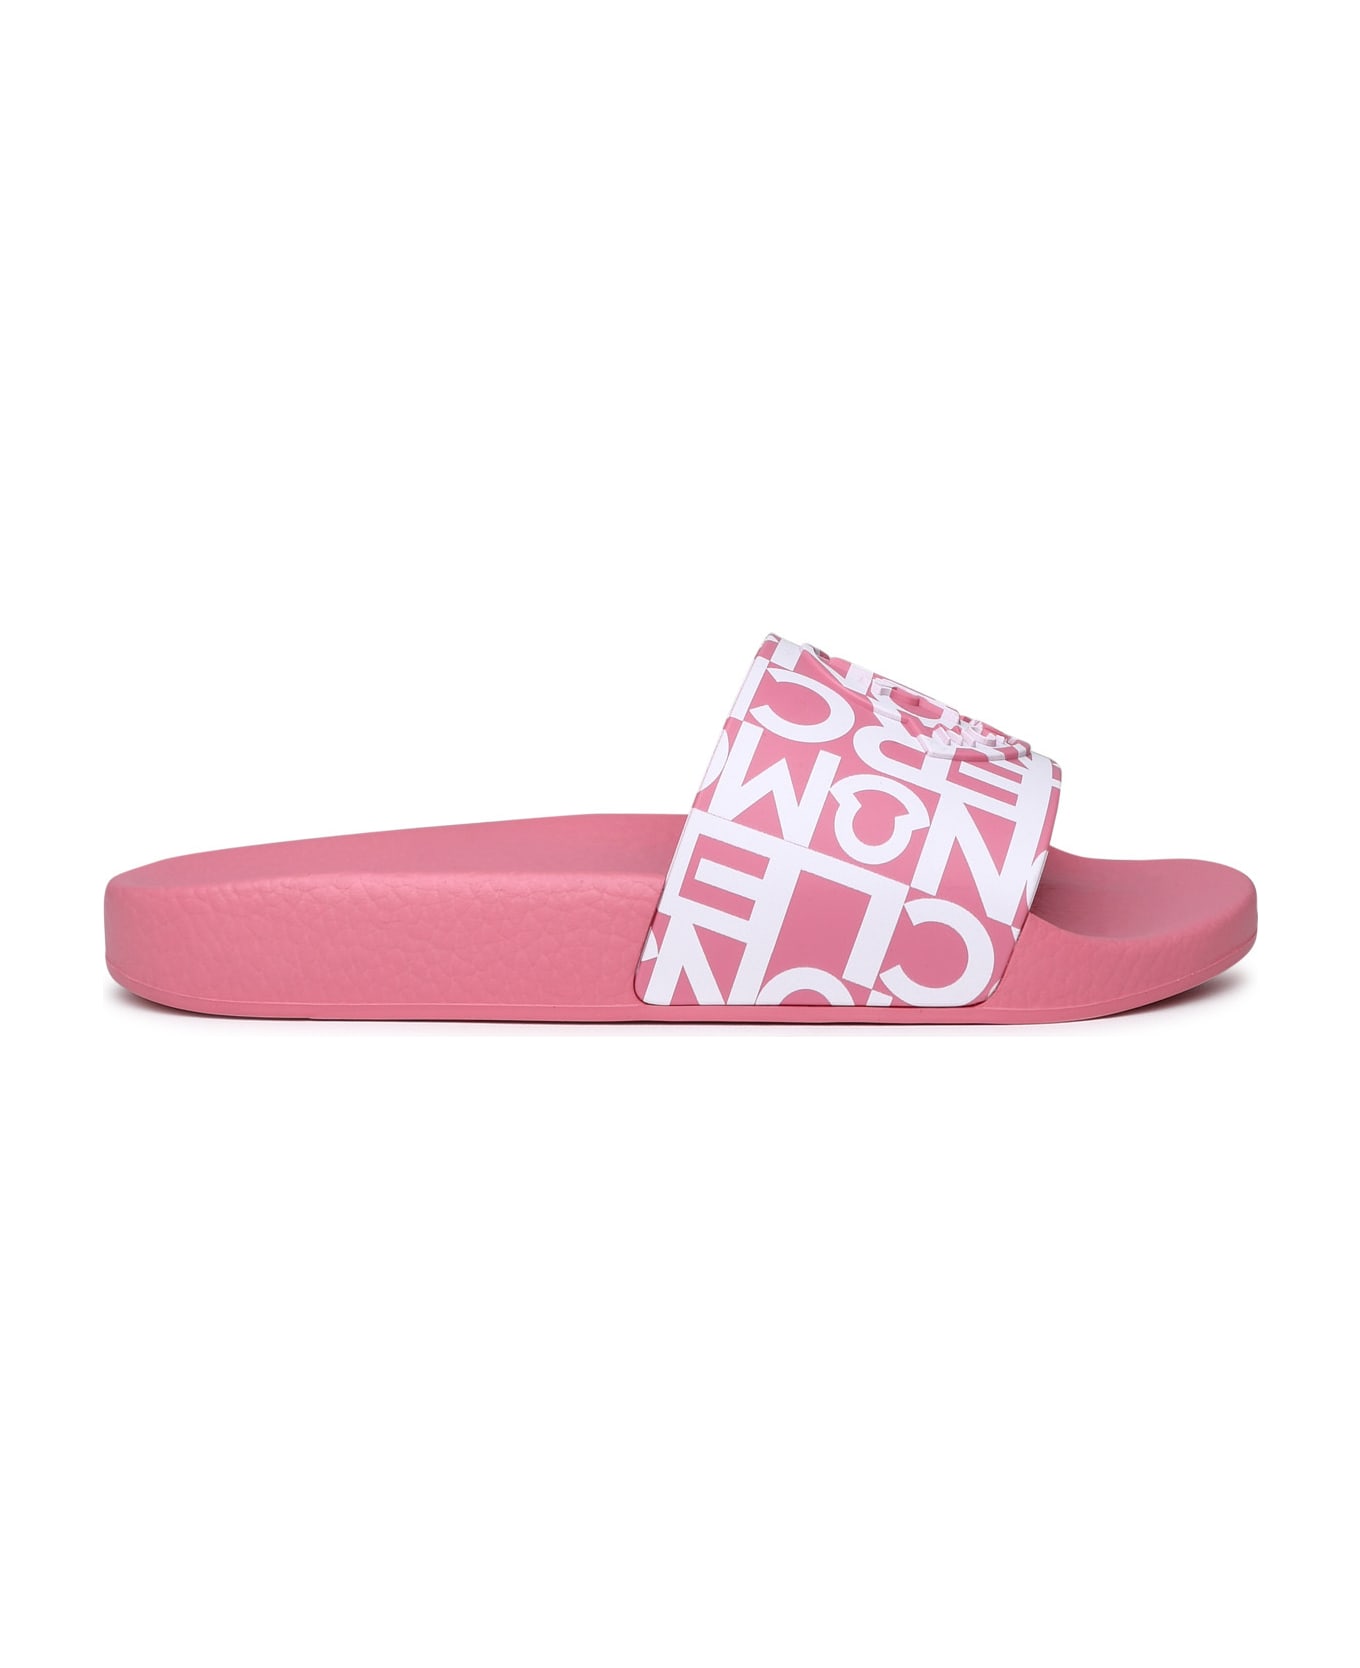 Moncler Jane Rose Rubber Slippers - Rosa